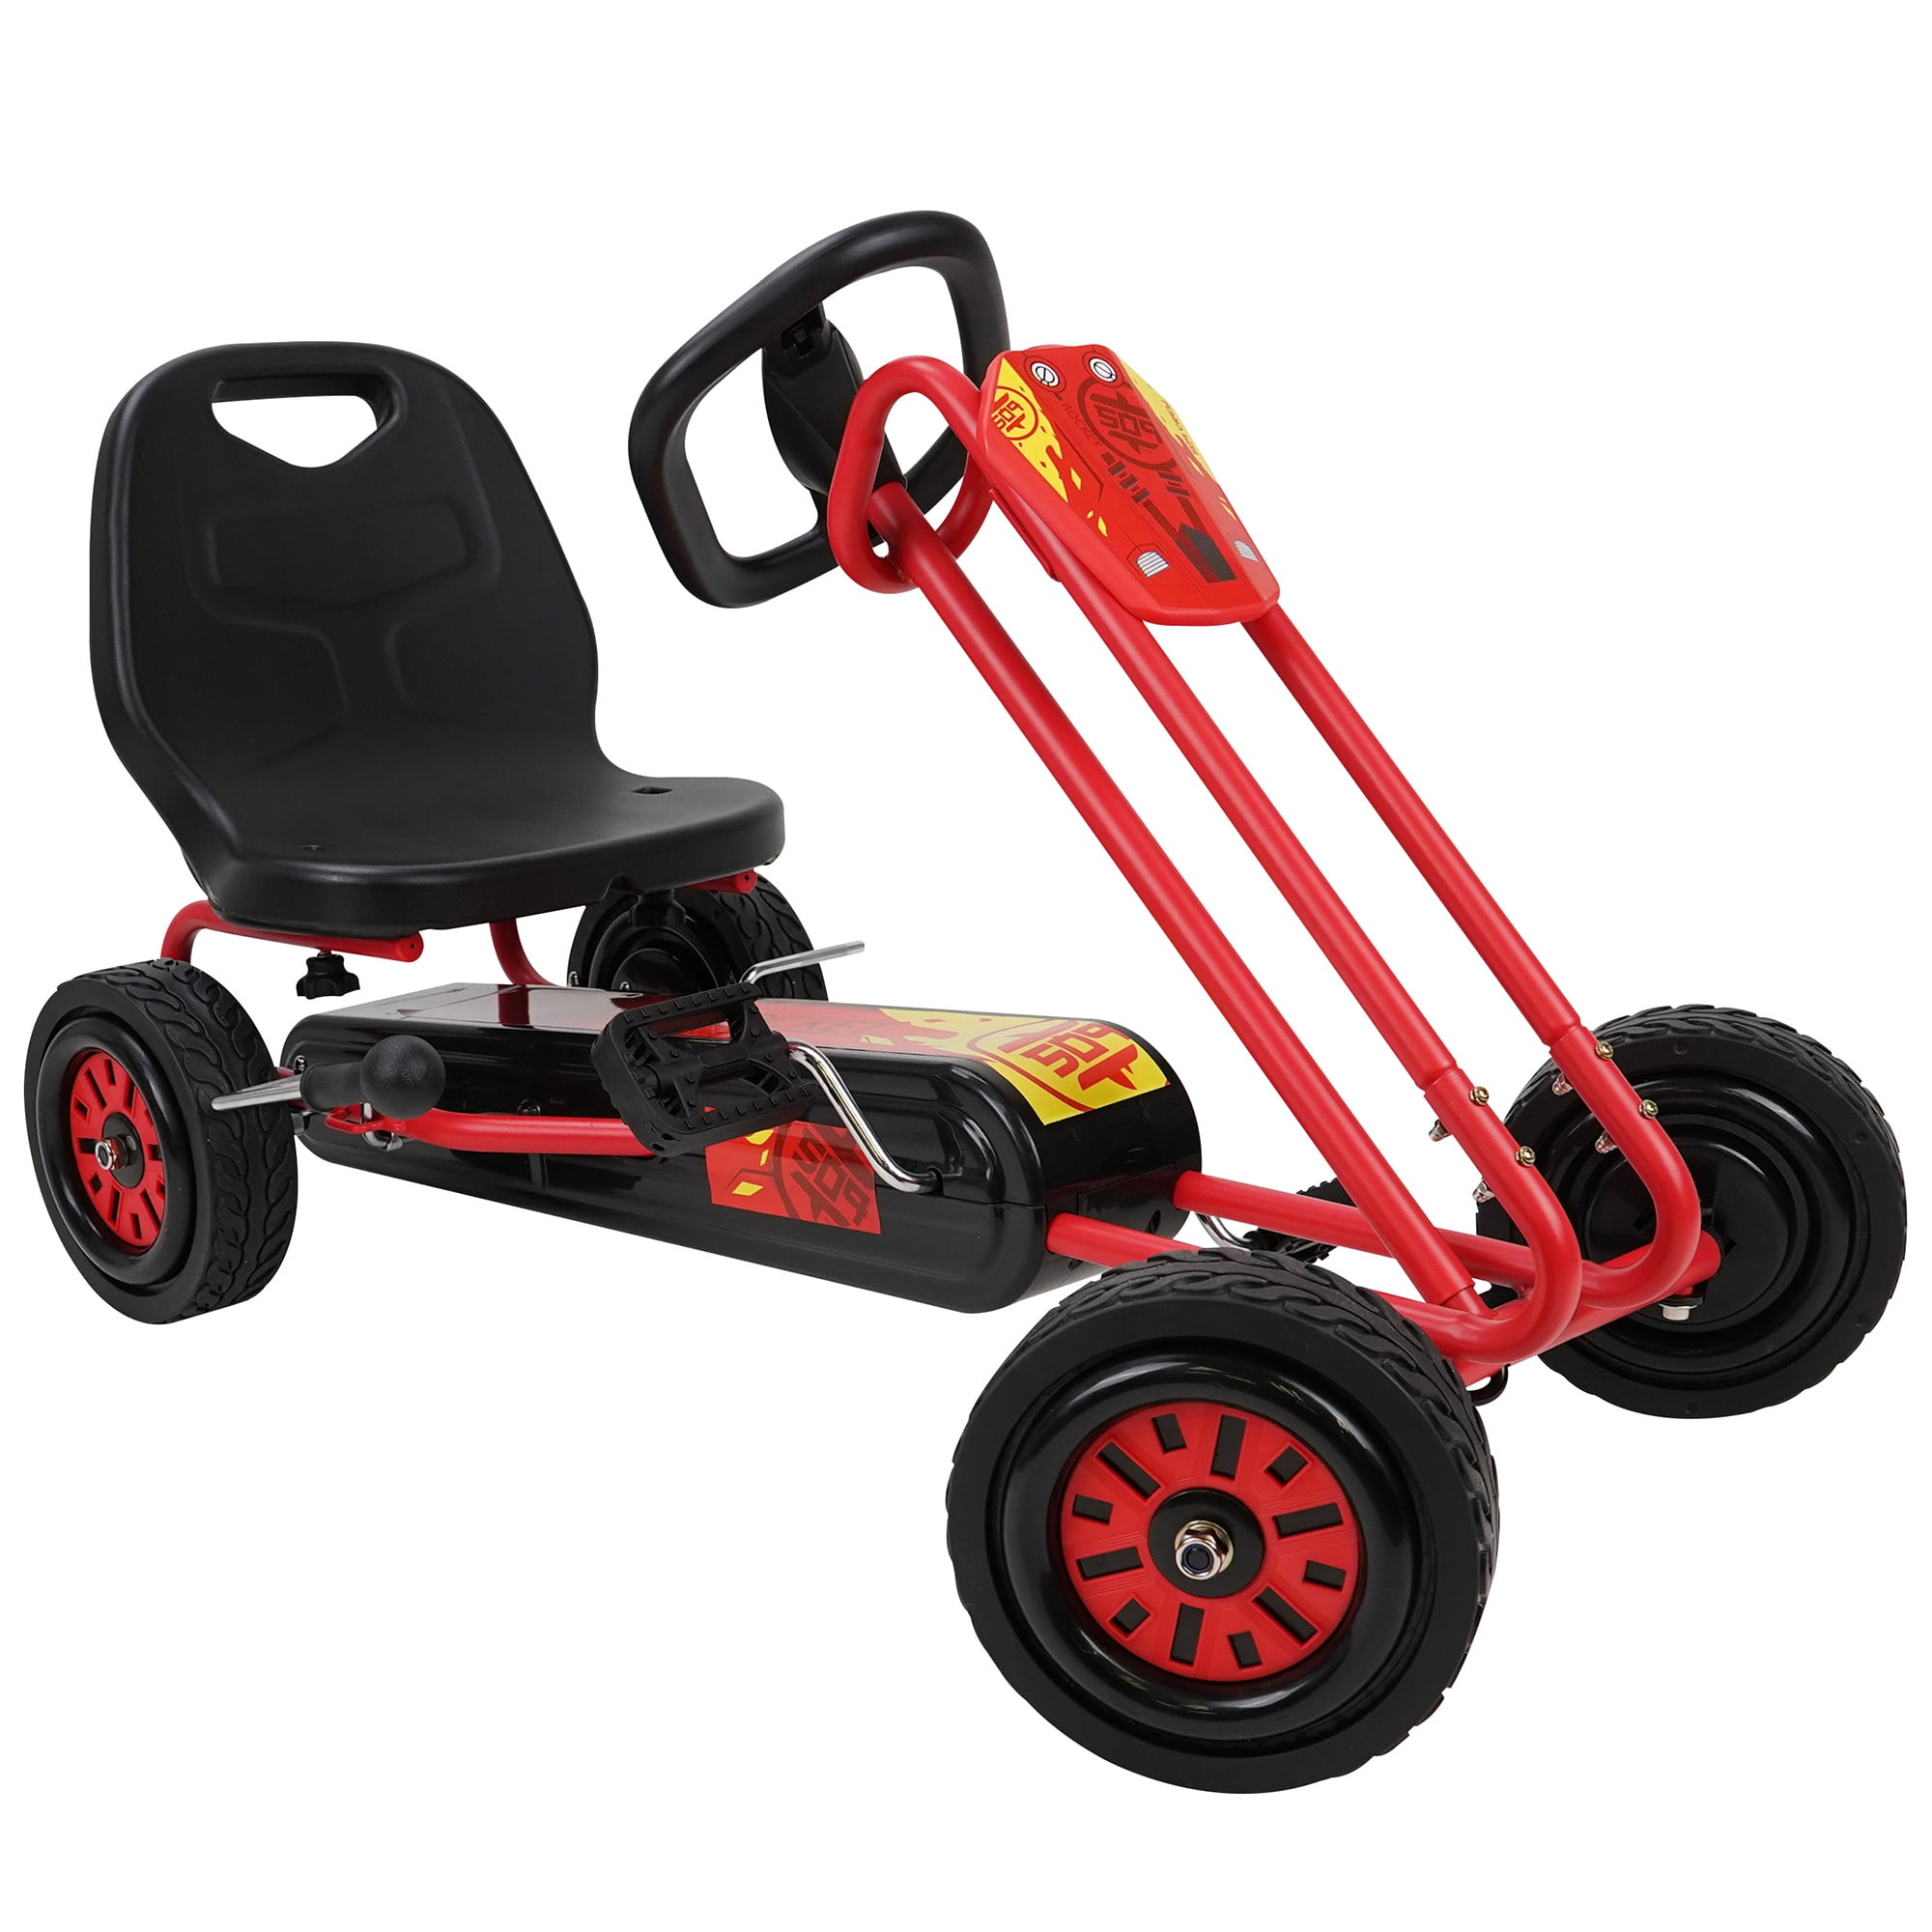 509 Crew Race Z Pedal Go Kart - Red - Kids Go Kart Ages 4 Plus U930002 -  The Home Depot